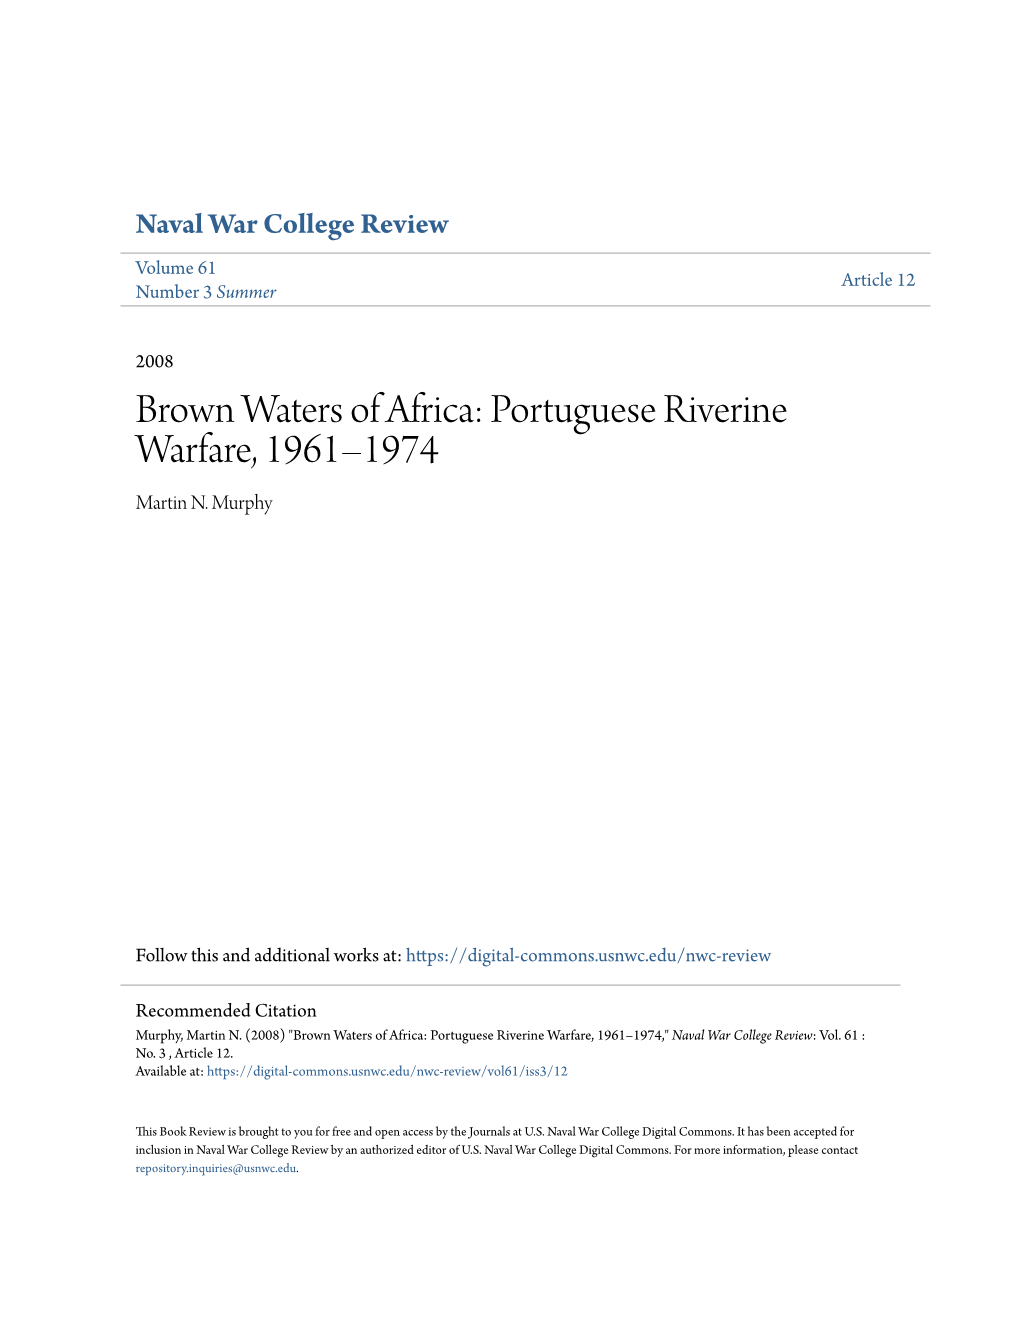 Brown Waters of Africa: Portuguese Riverine Warfare, 1961–1974 Martin N